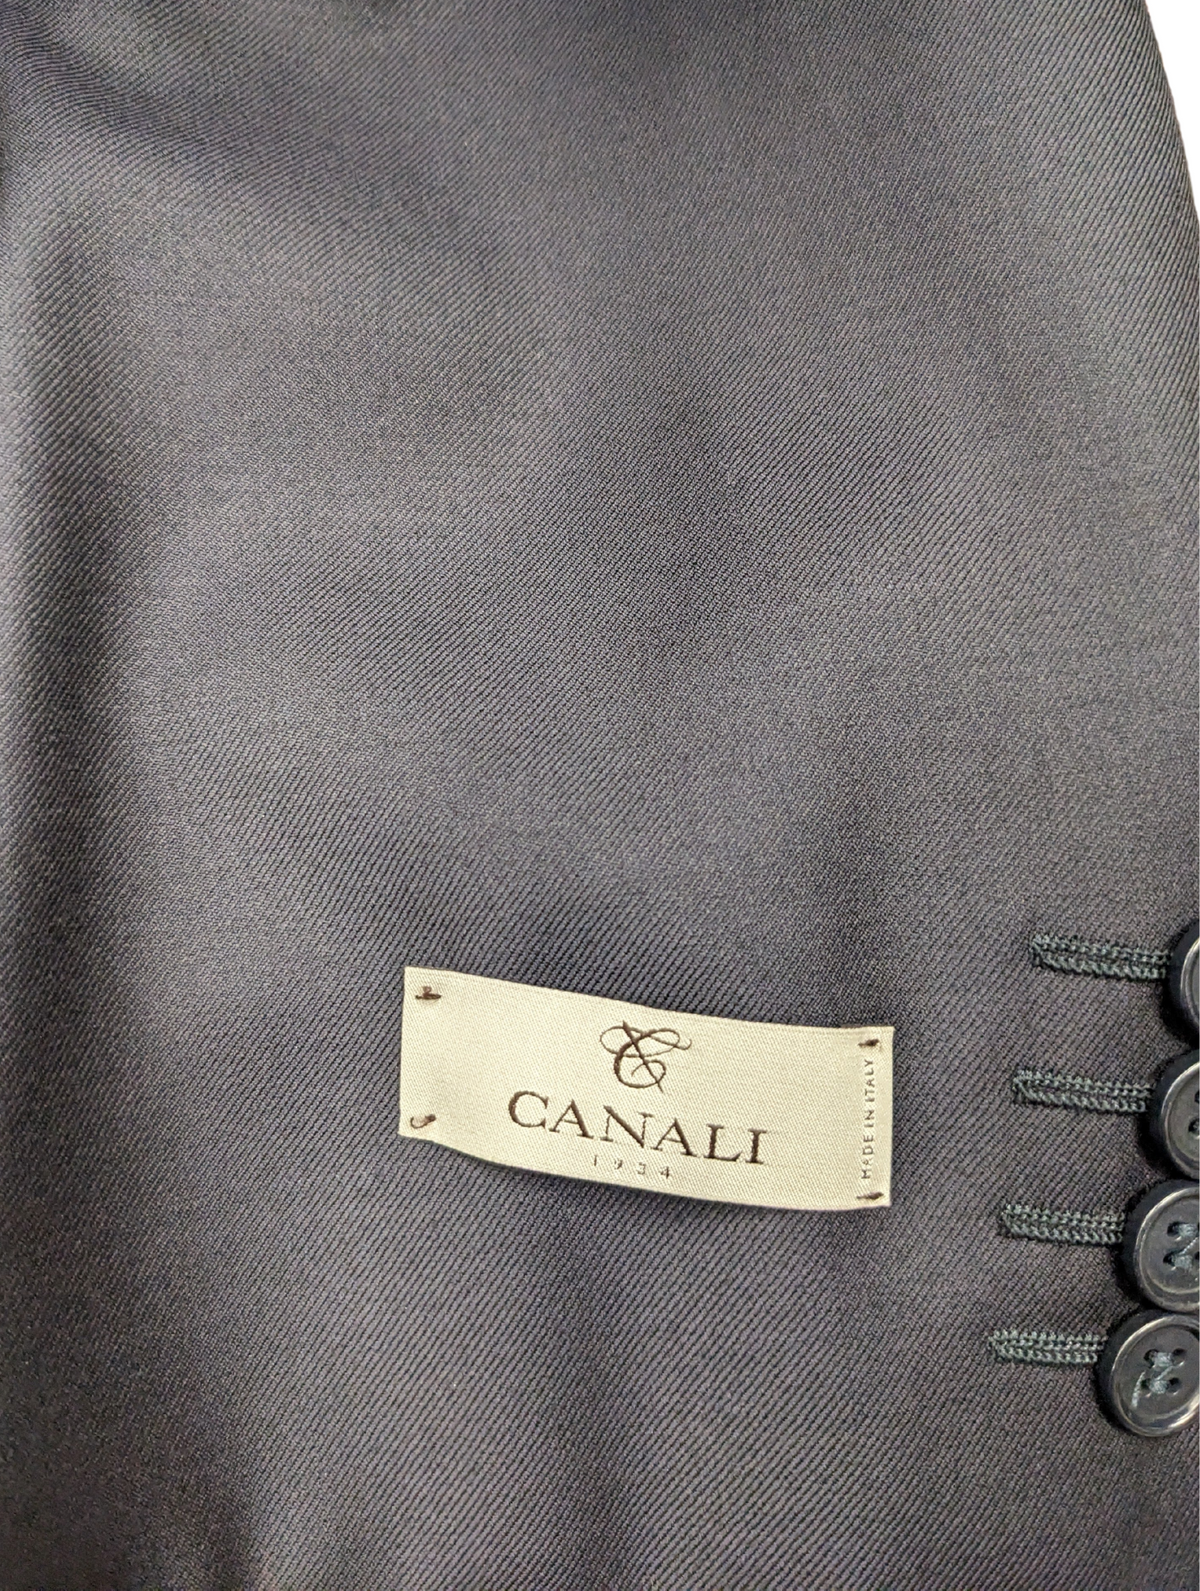 Canali 1934 Mens Solid Navy Blue 44L Drop 7 100% Wool 2 Piece Suit